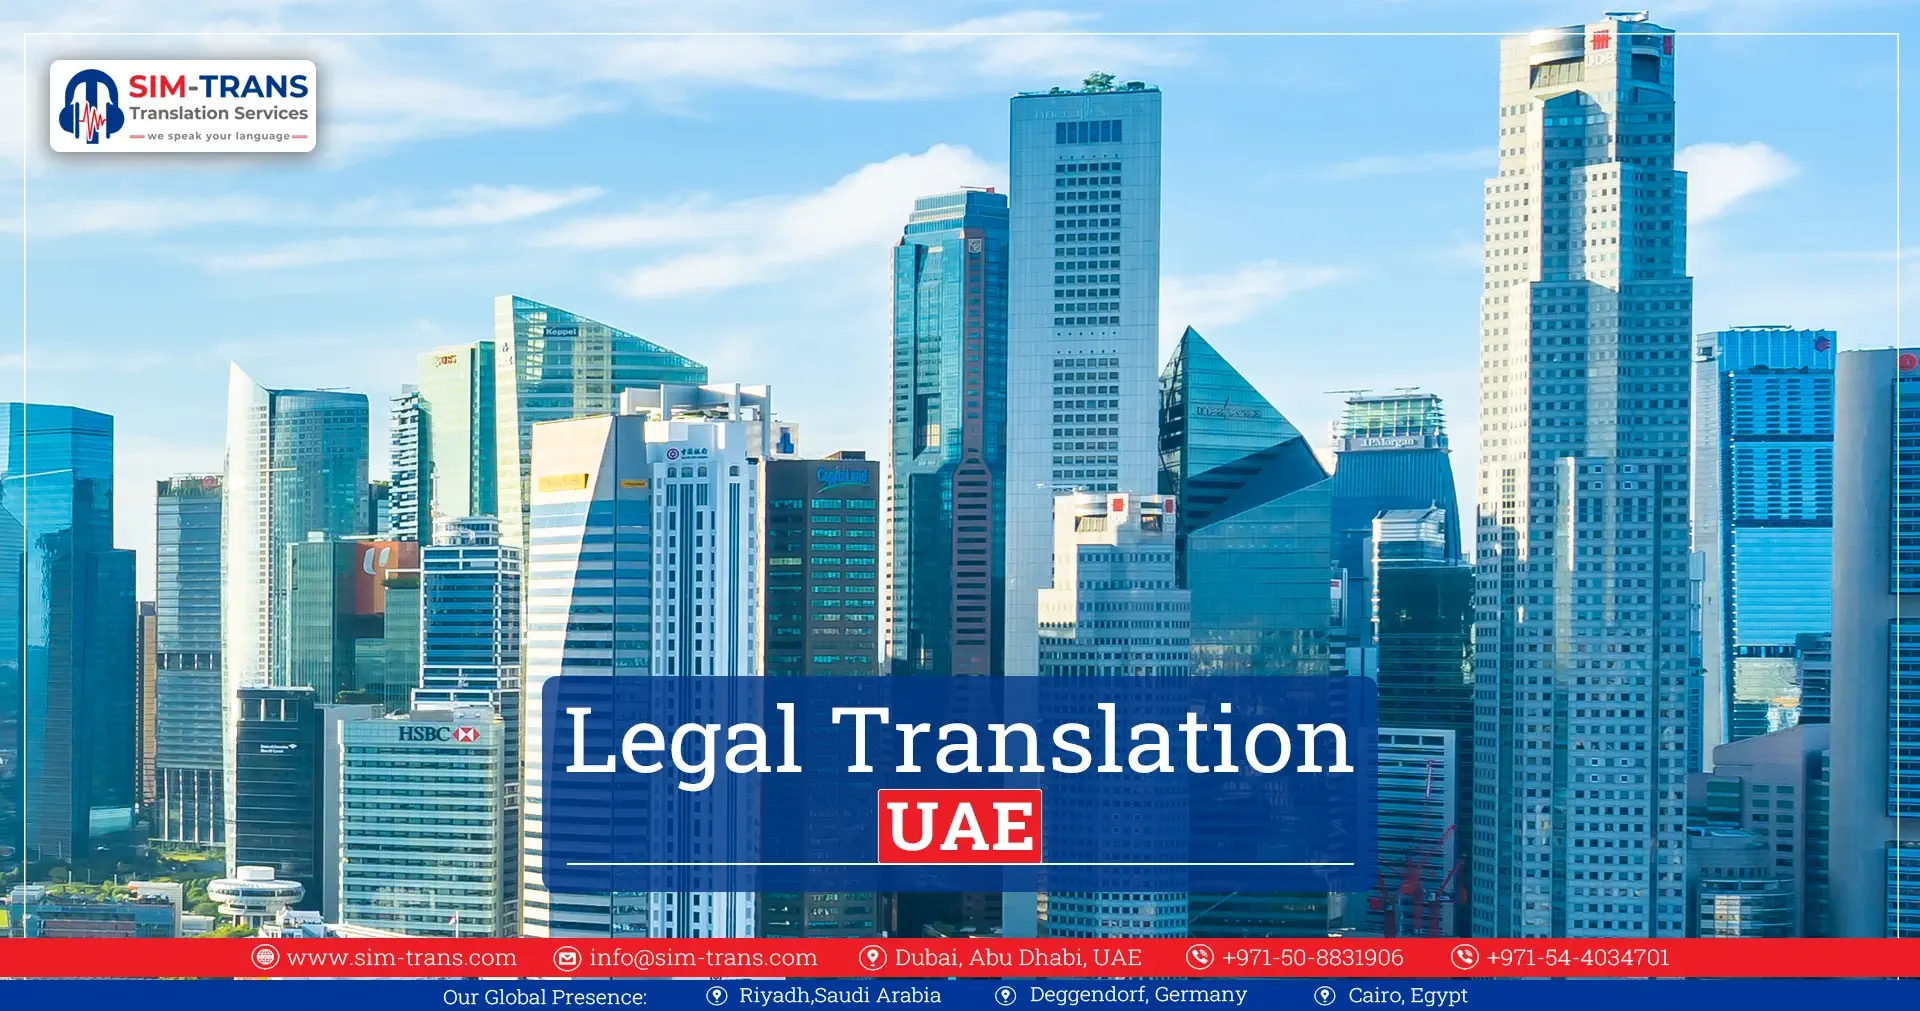 Legal Translation Dubai: Sim-Trans Your Reliable Partner